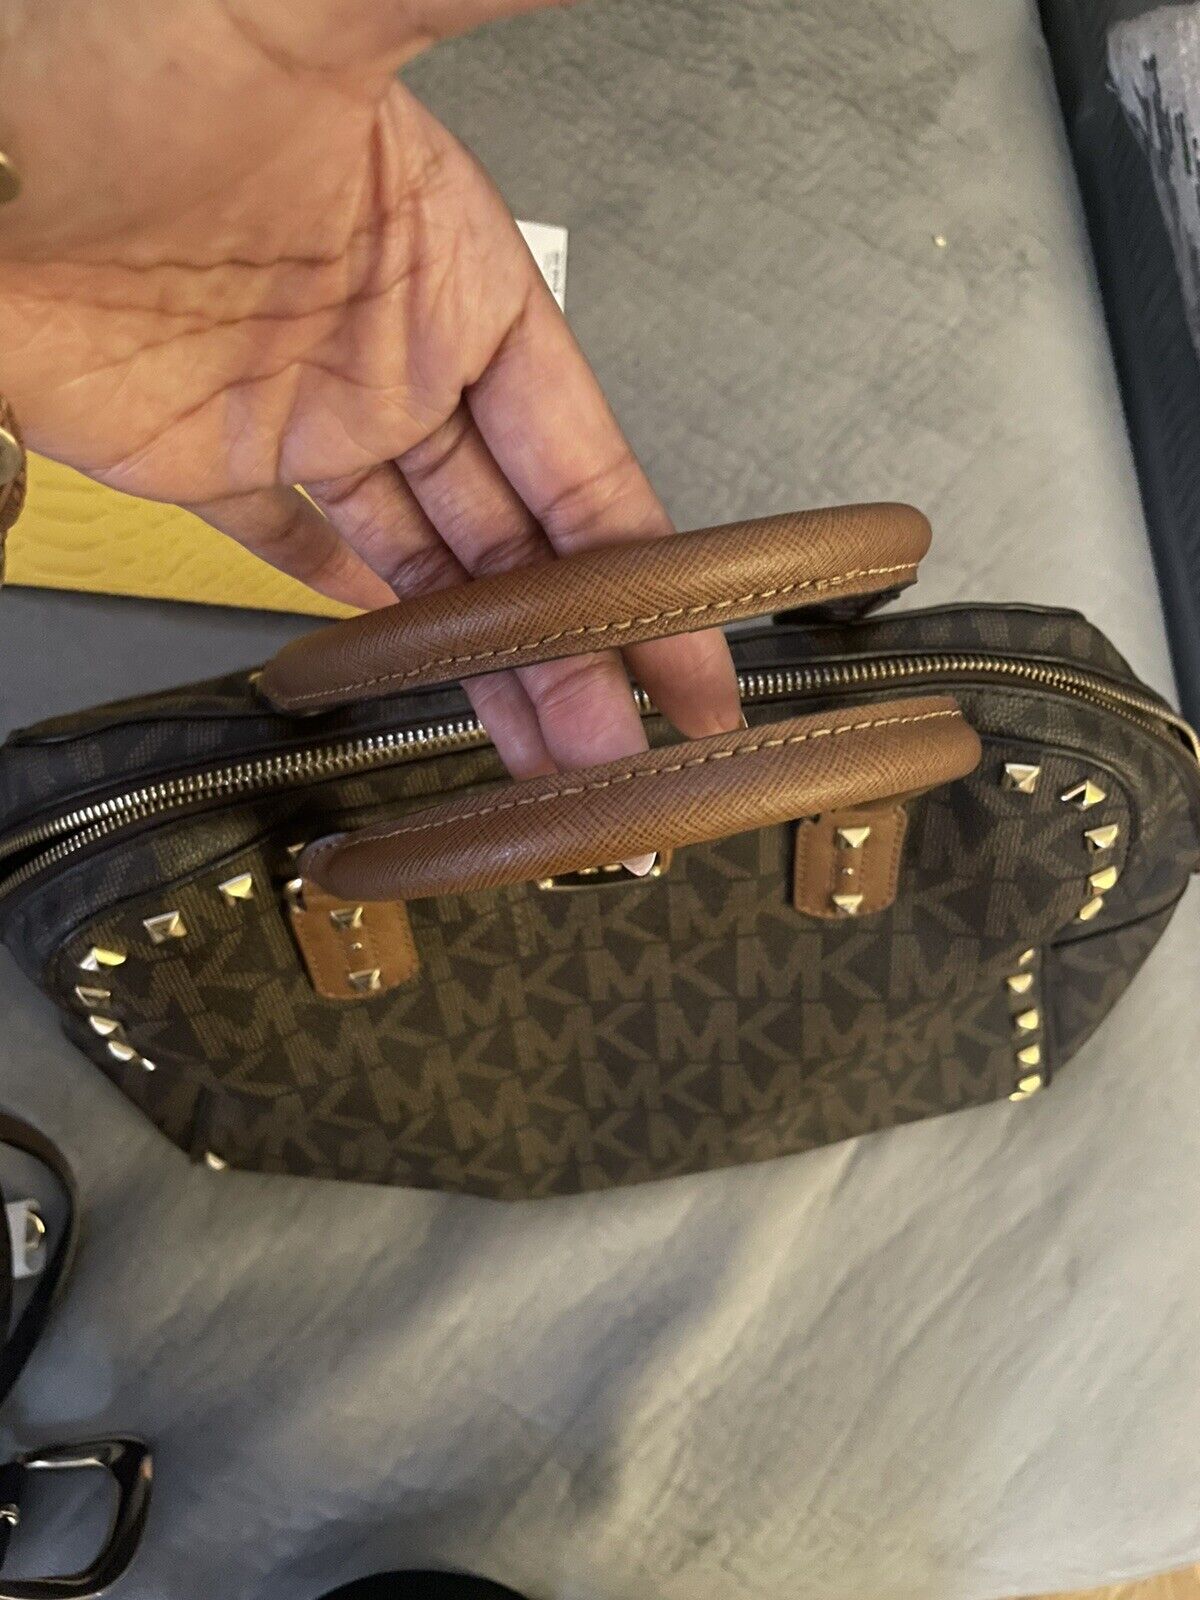 michael kors handbag authentic - image 2